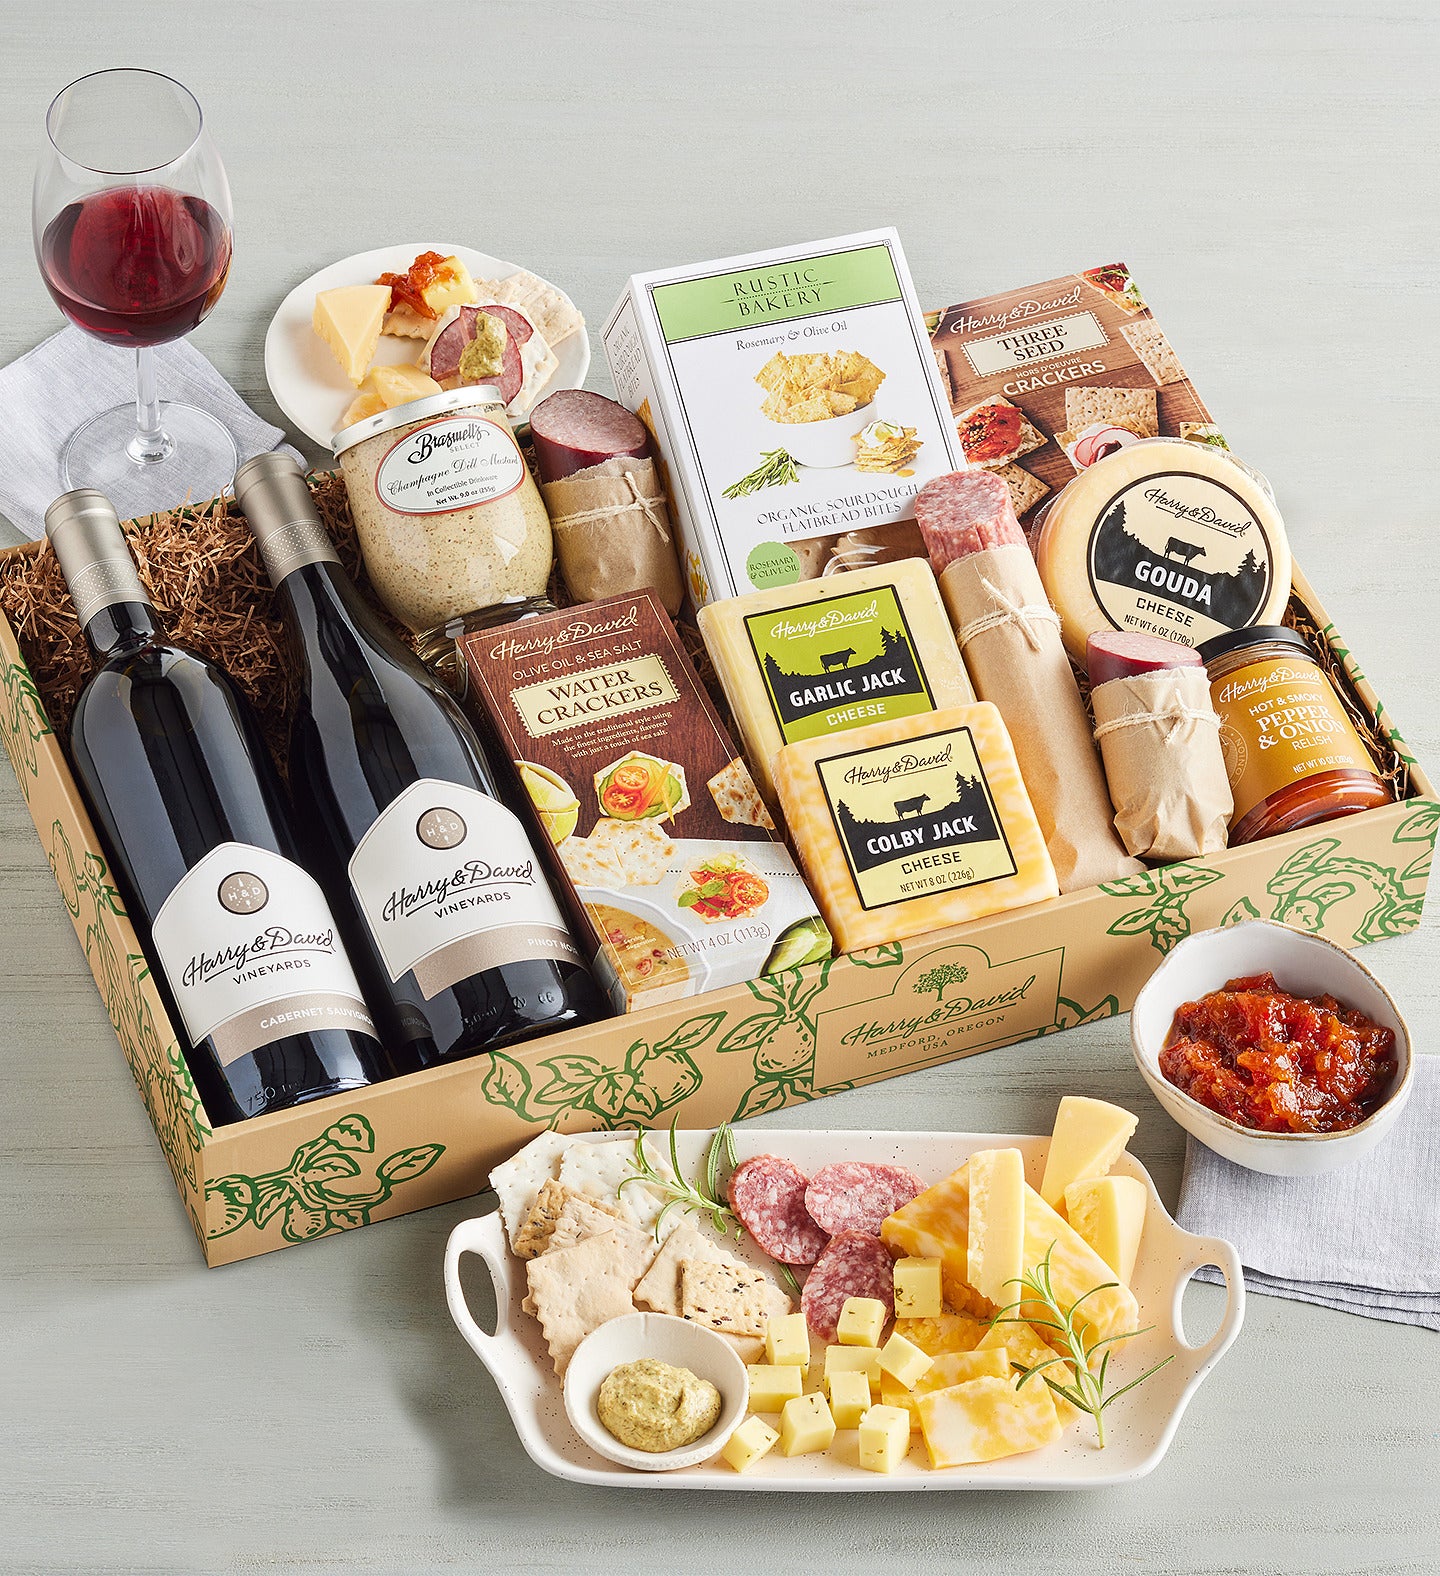 Salami, Cheese, & Crackers Wine Gift Set - wine gift baskets - USA